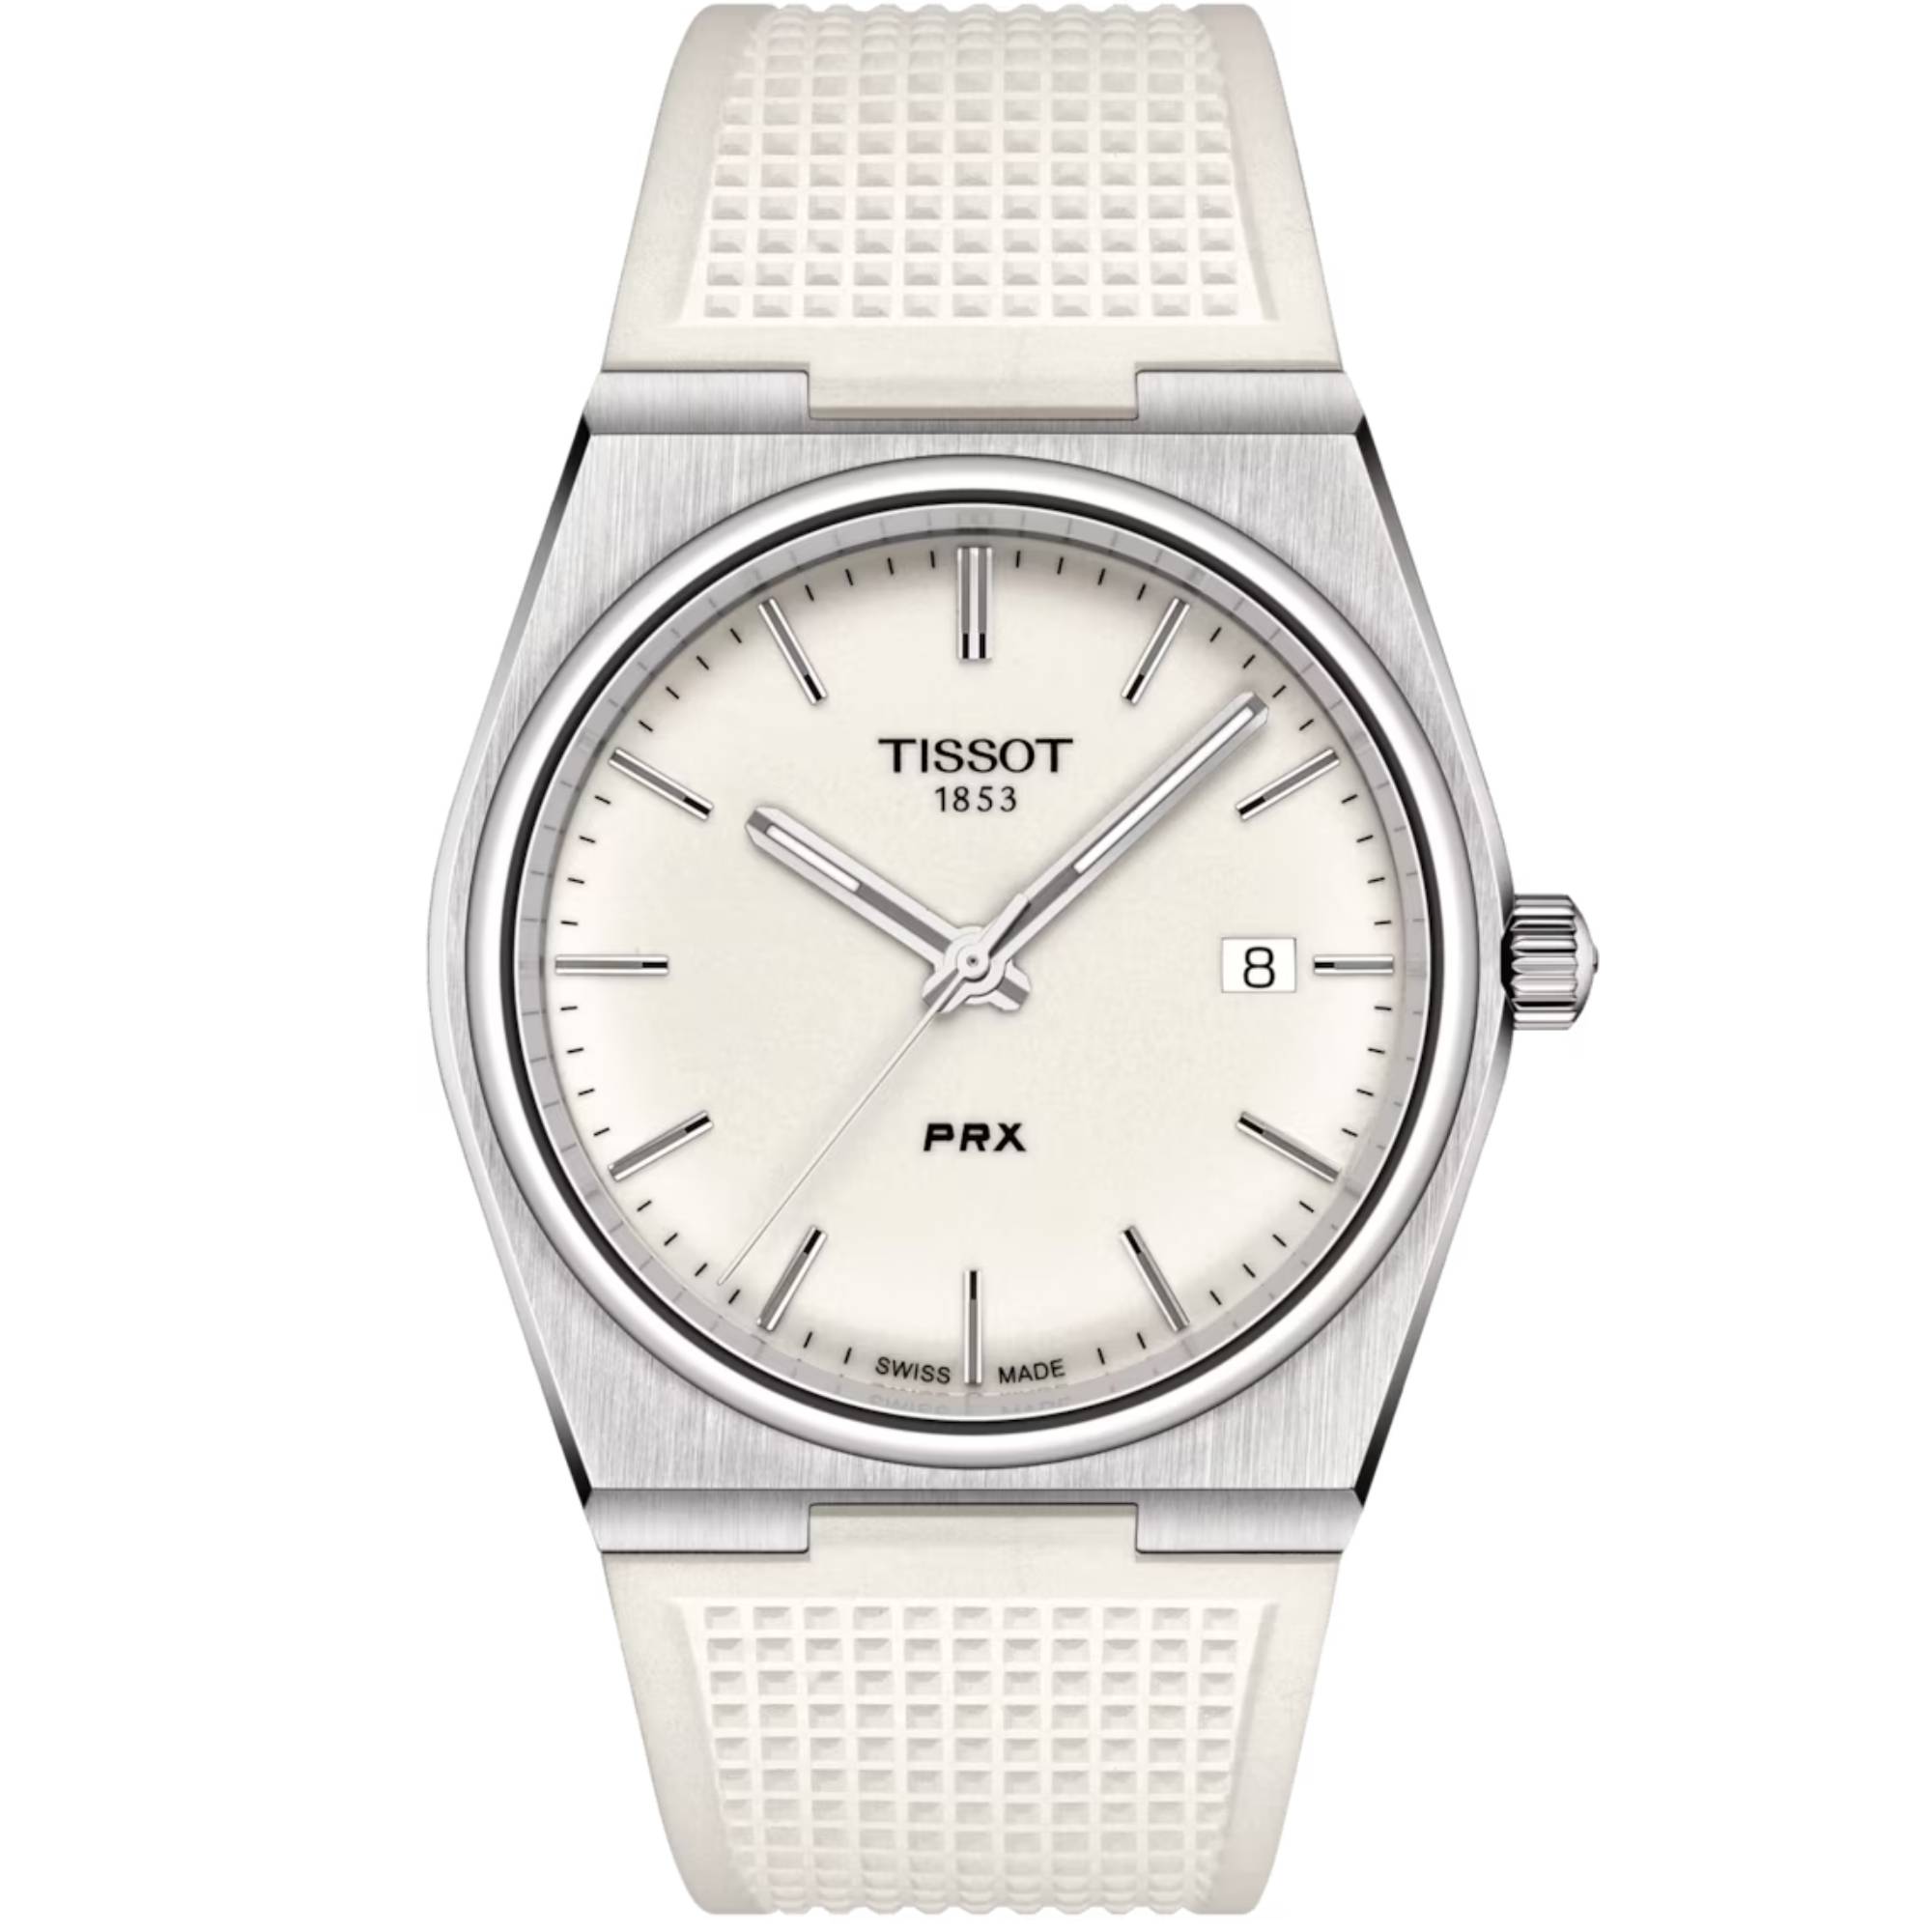 Relógio Tissot Prx Branco T137.410.17.011.00